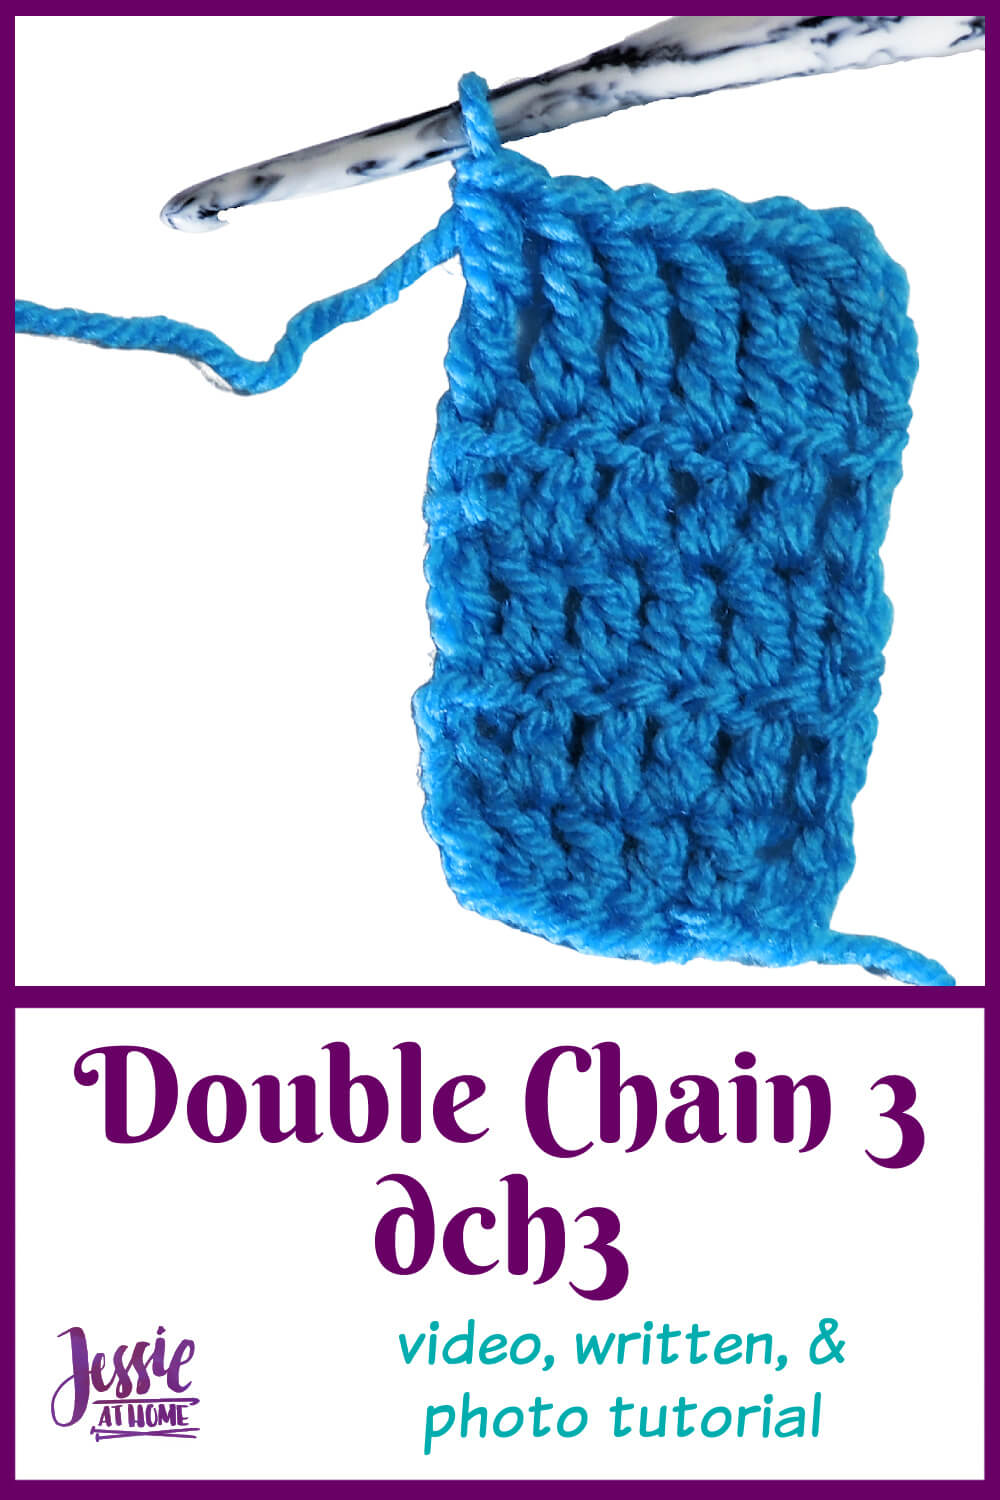 DCH3 Double Chain Three Stitchopedia - Video, Photo, & Written Tutorial